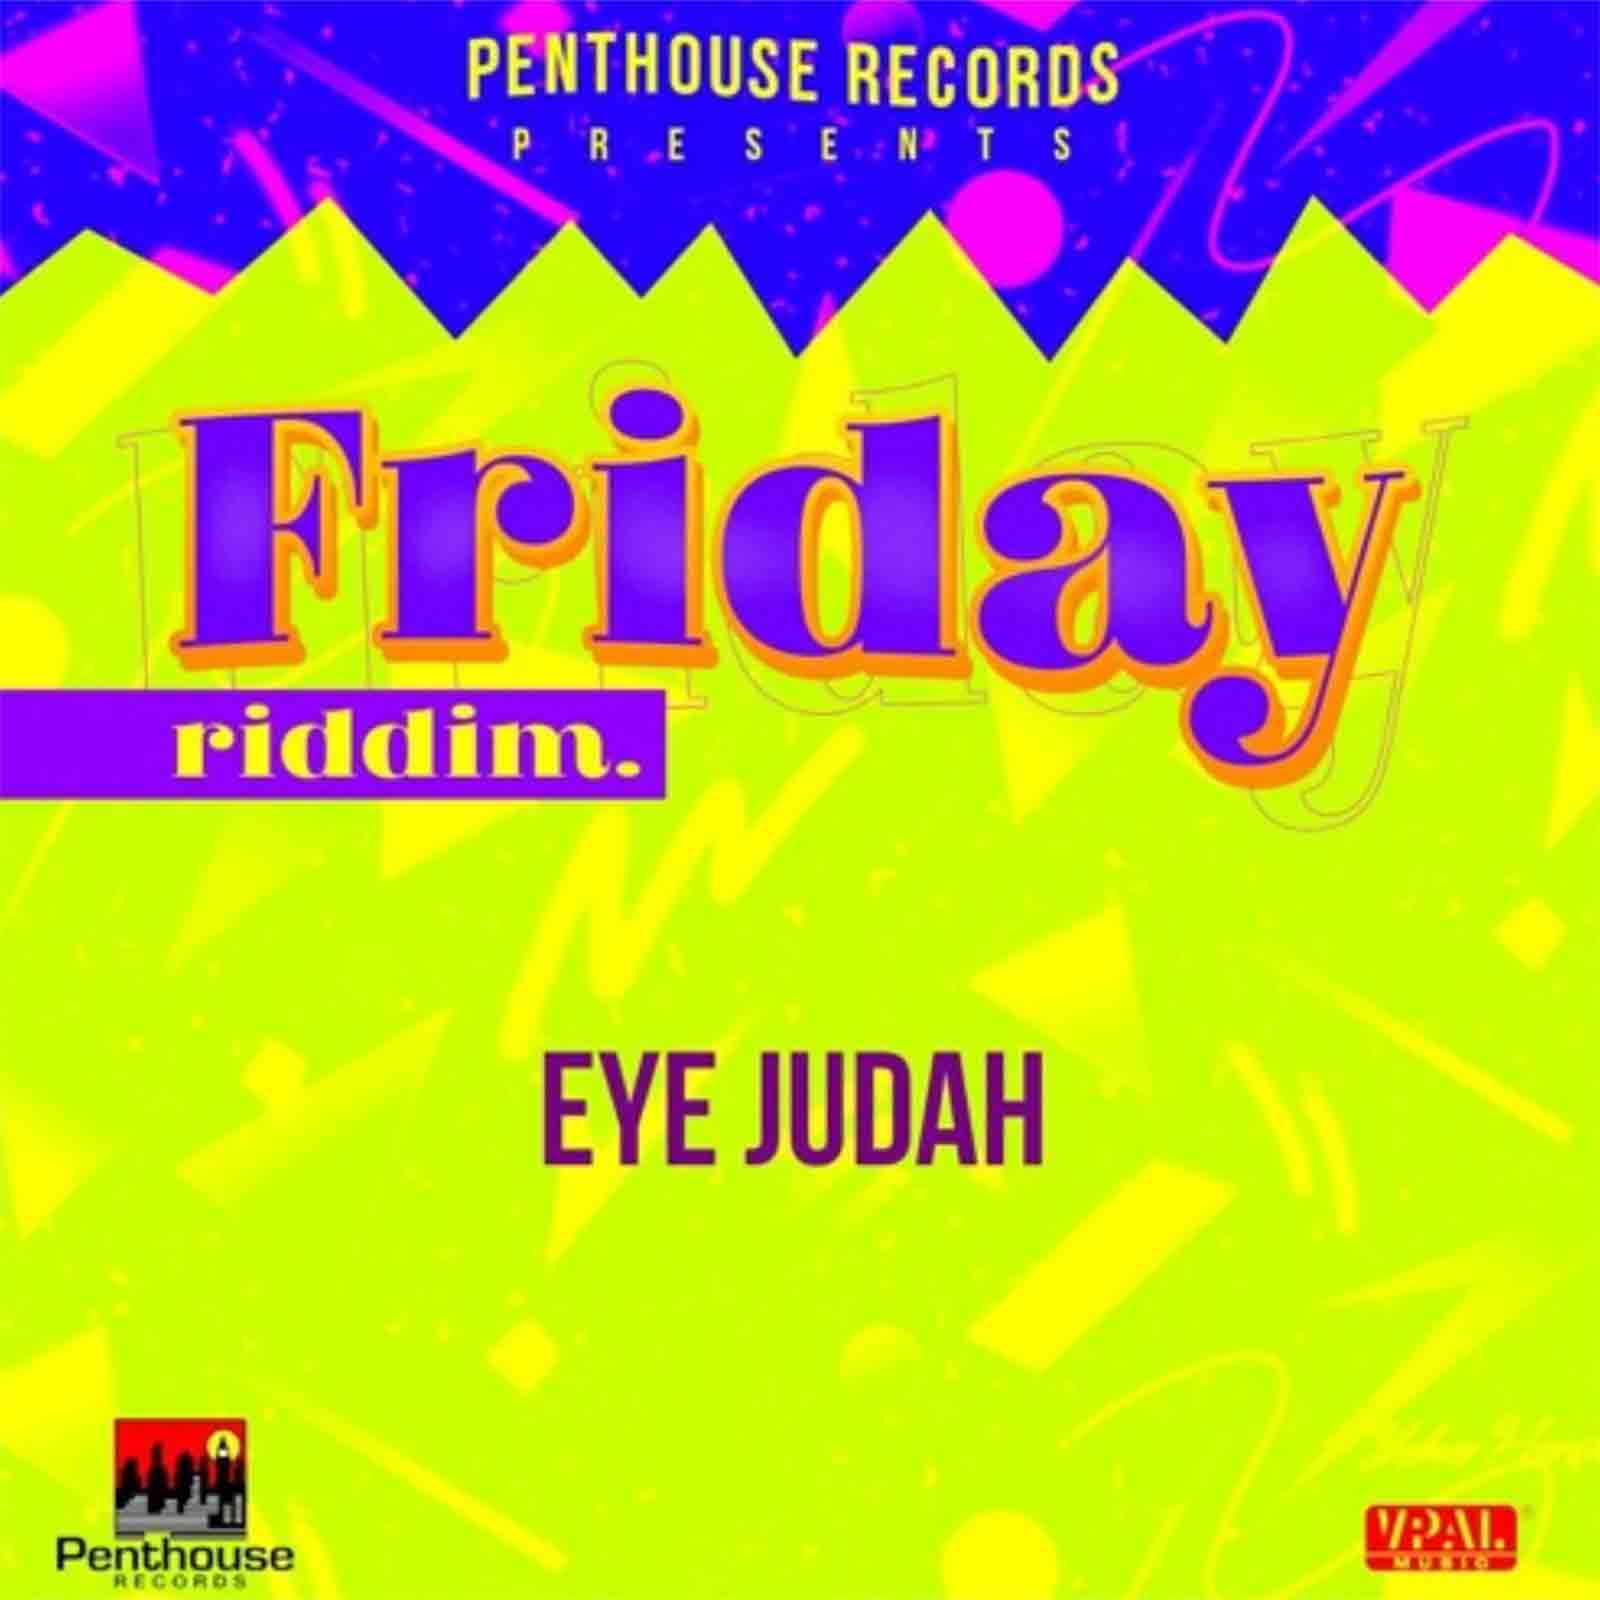 Give Thanks (Friday Riddim) by Eye Judah